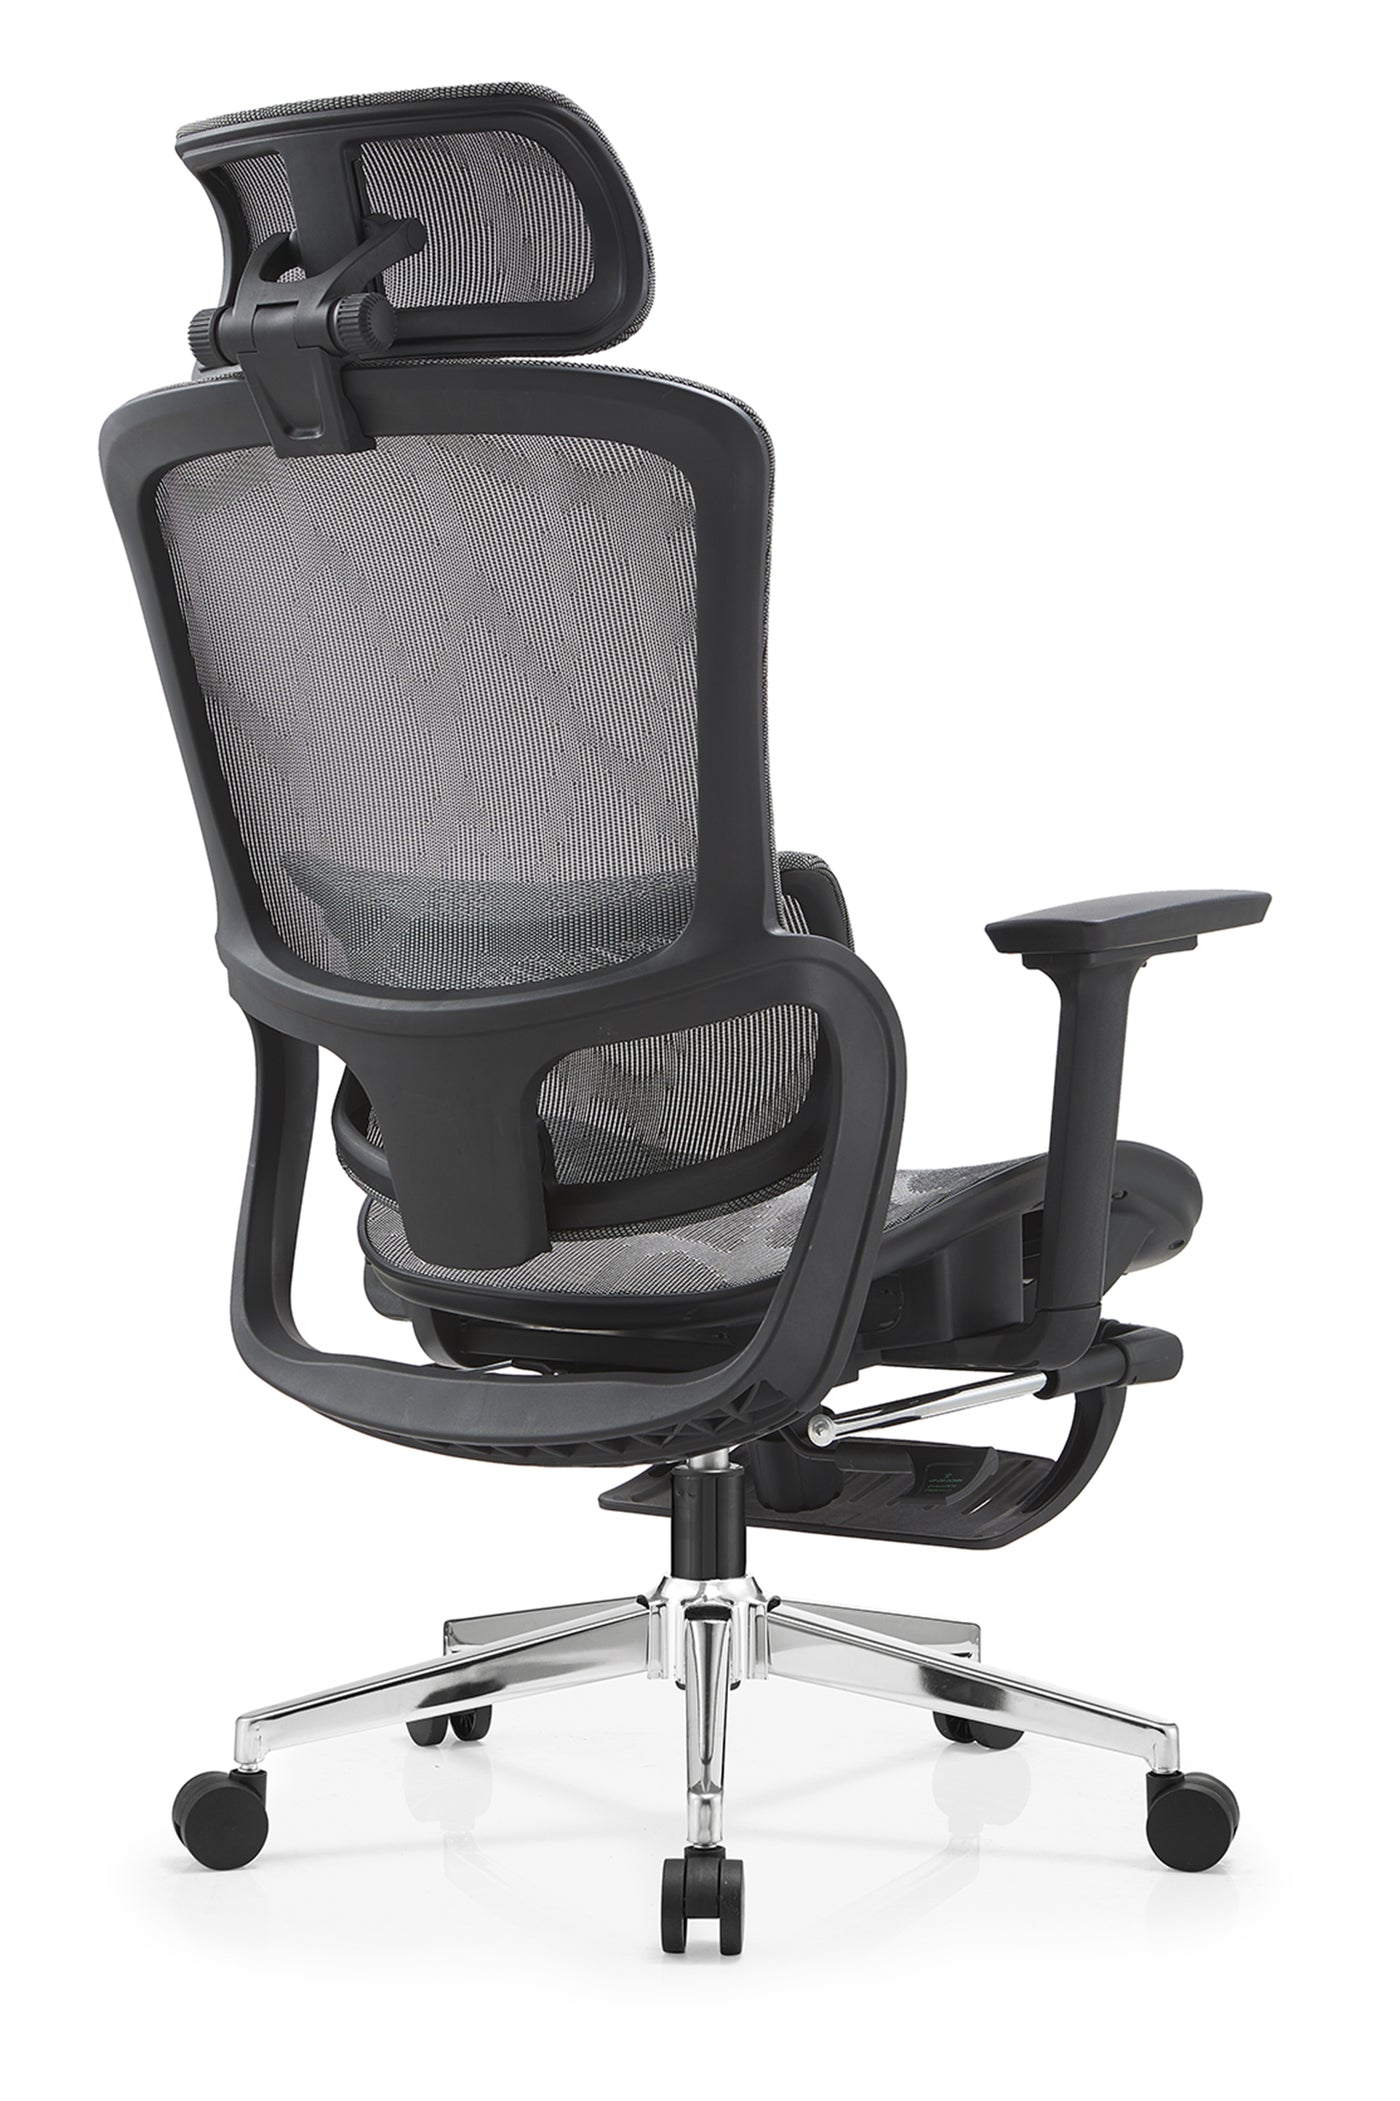 Swivel Ergonomic office chair